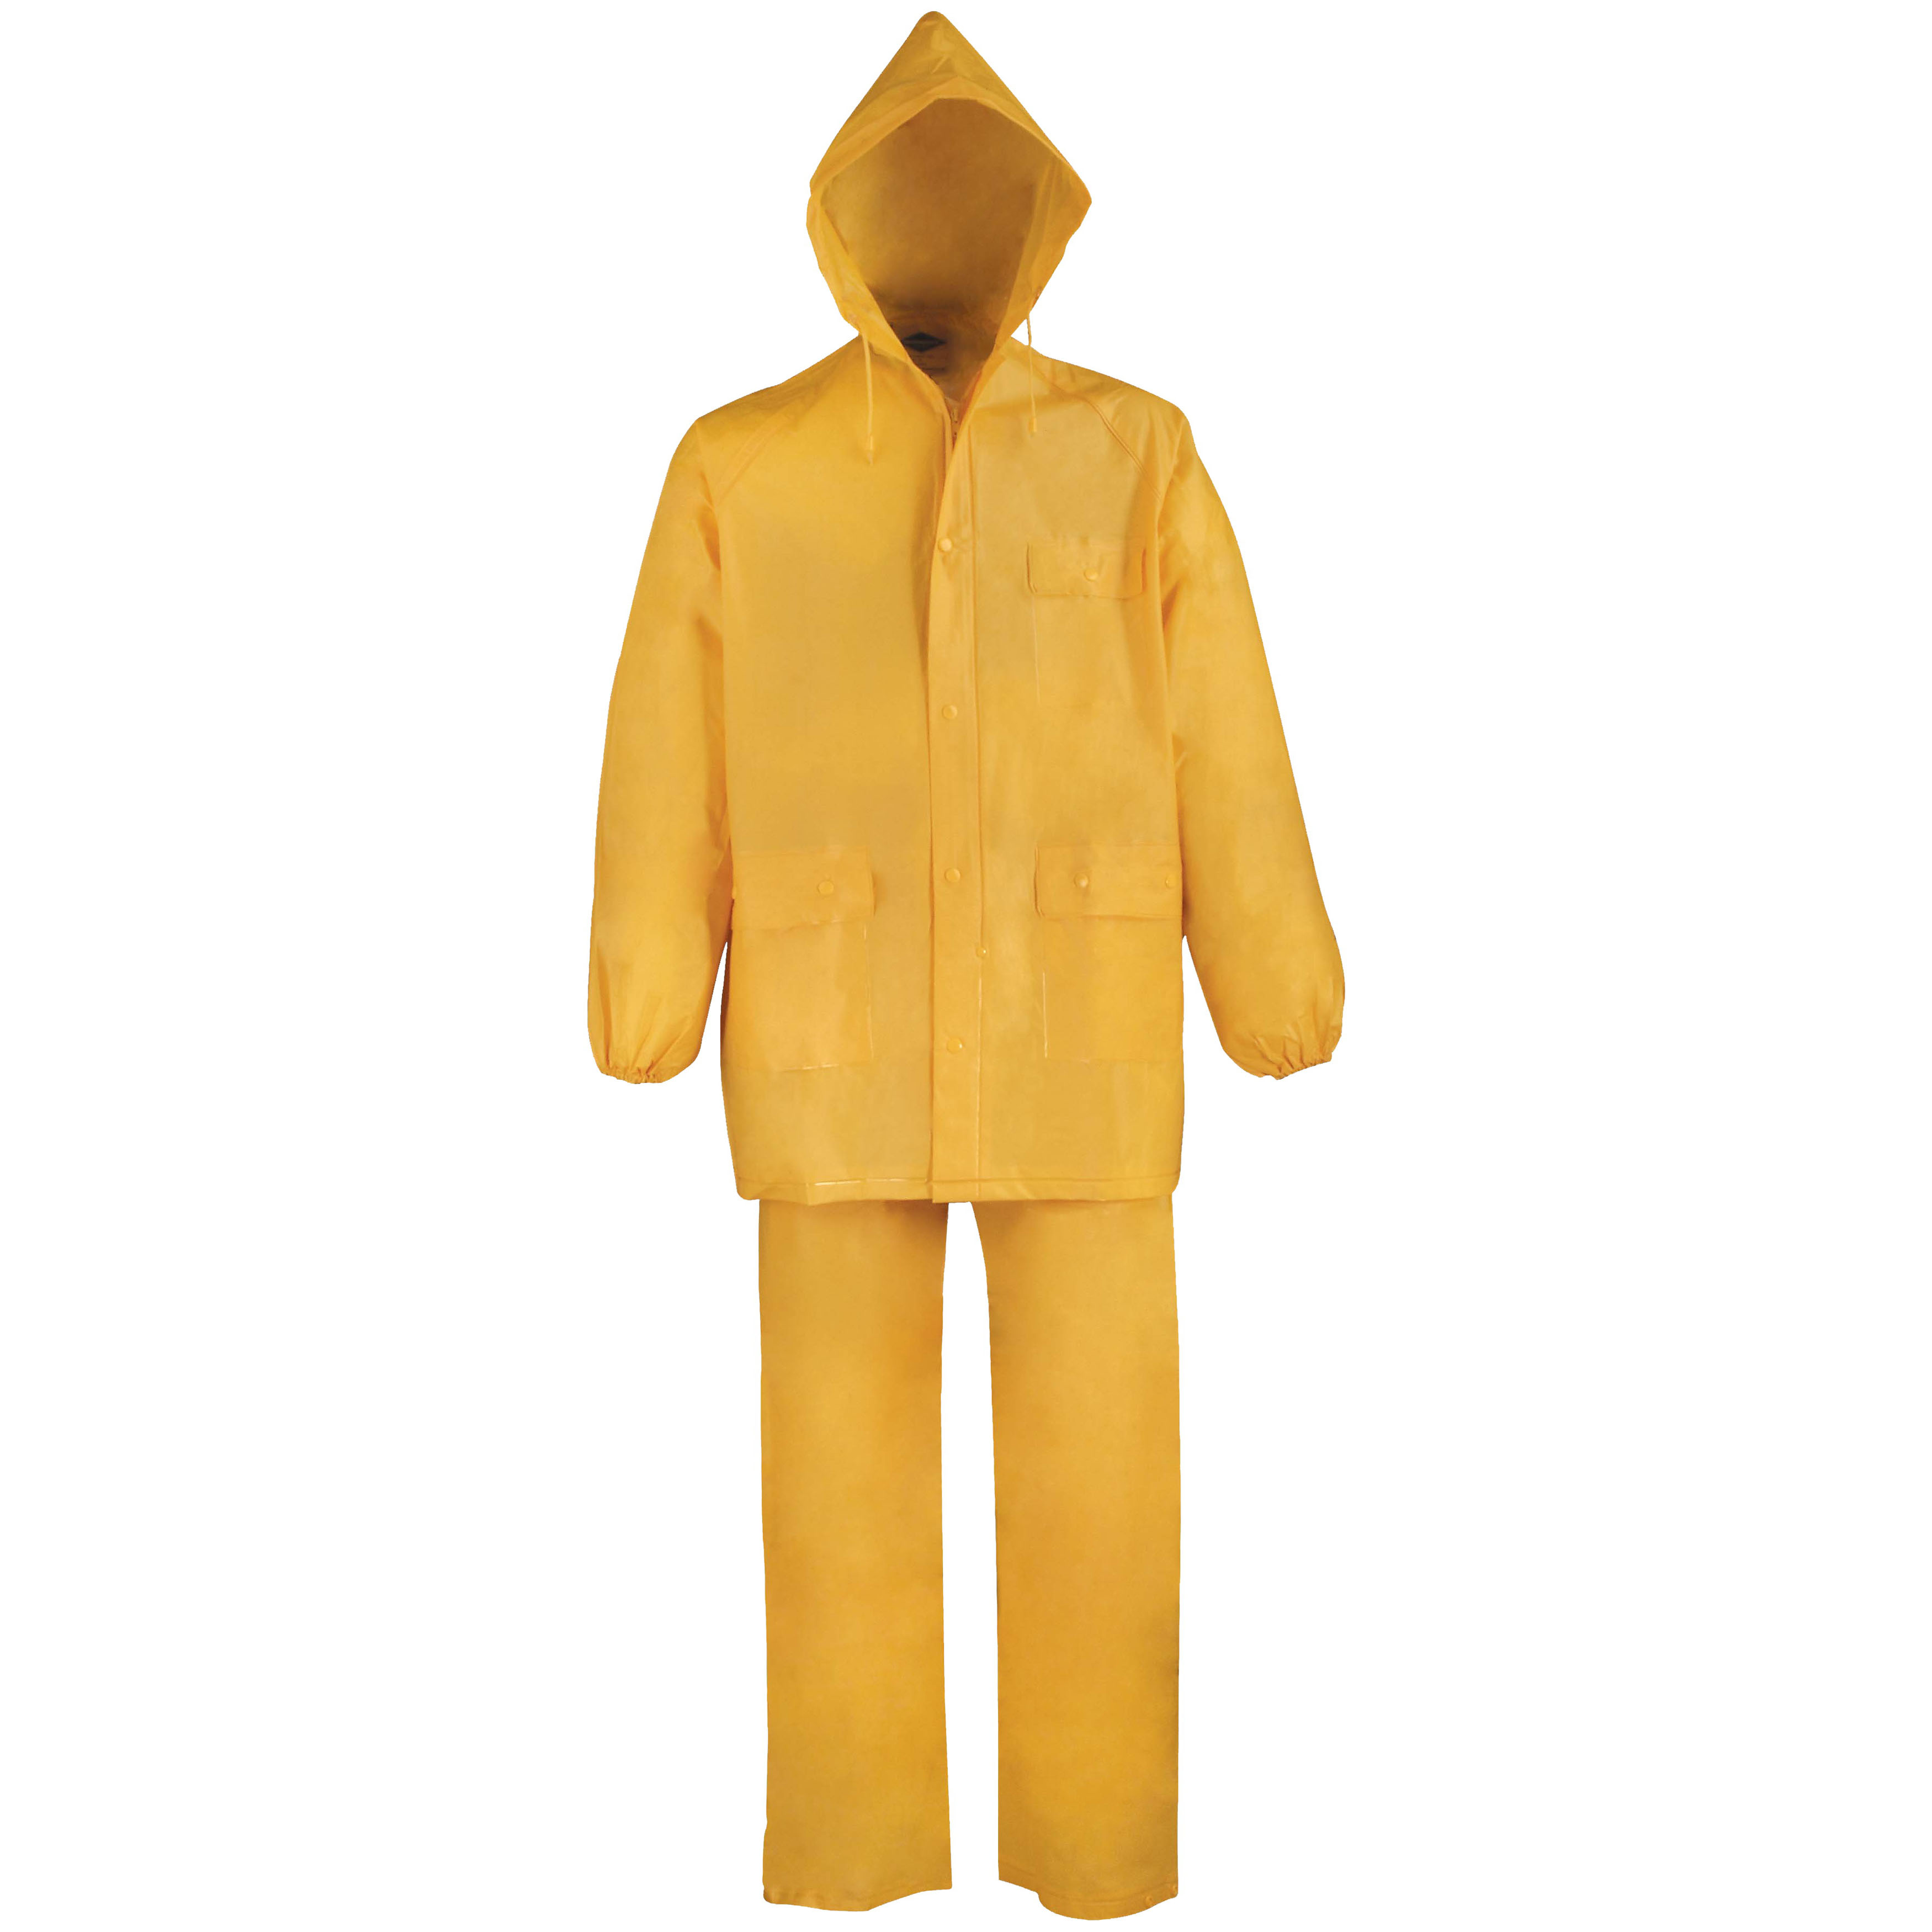 8127M Rain Suit, M, 28-1/2 in Inseam, PVC, Yellow, Drawstring Collar, Zipper with Storm Flap Closure